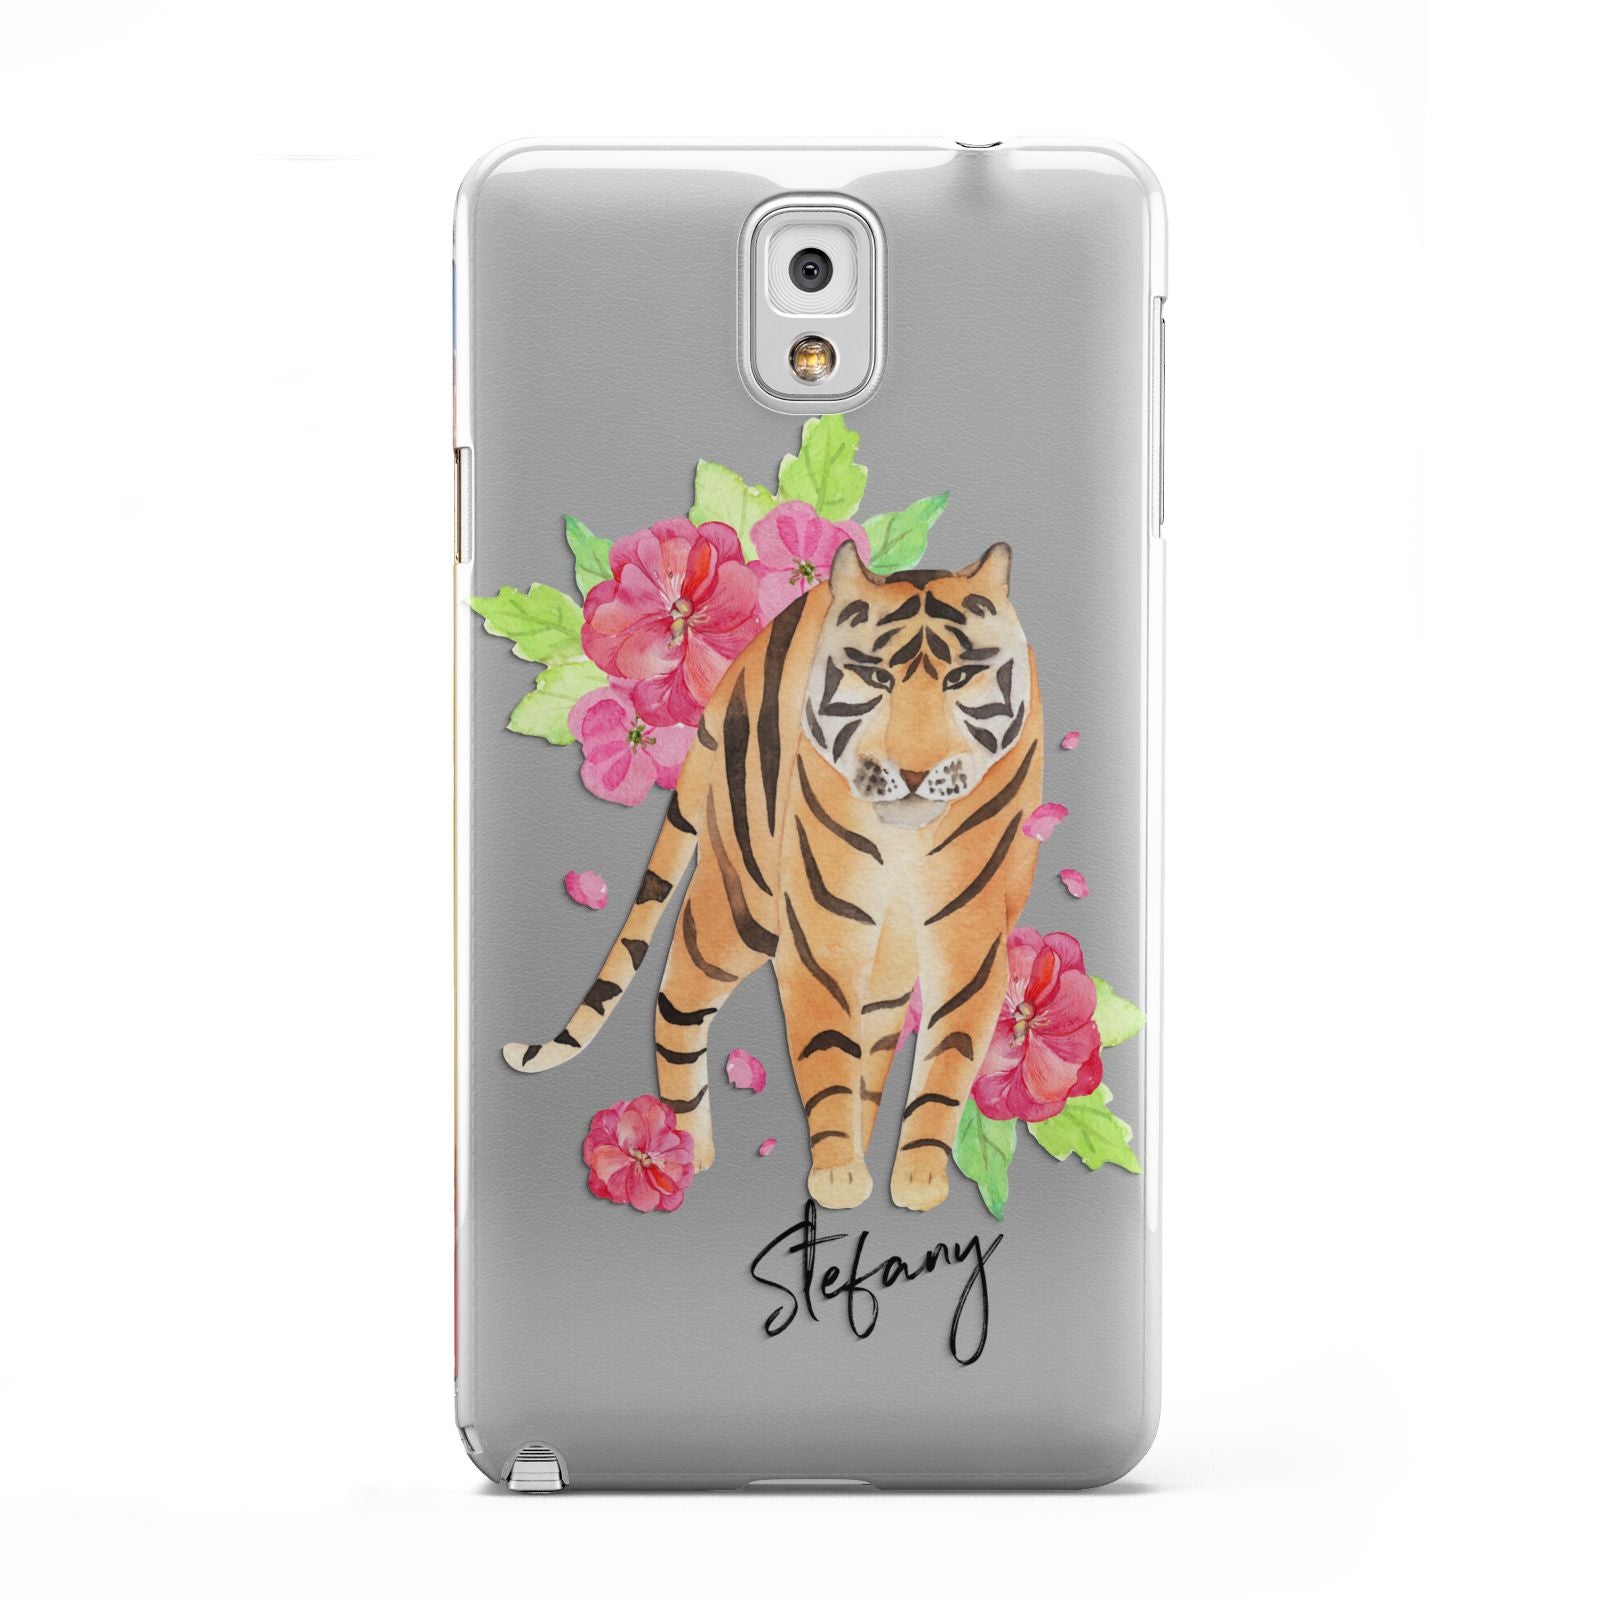 Personalised Tiger Samsung Galaxy Note 3 Case